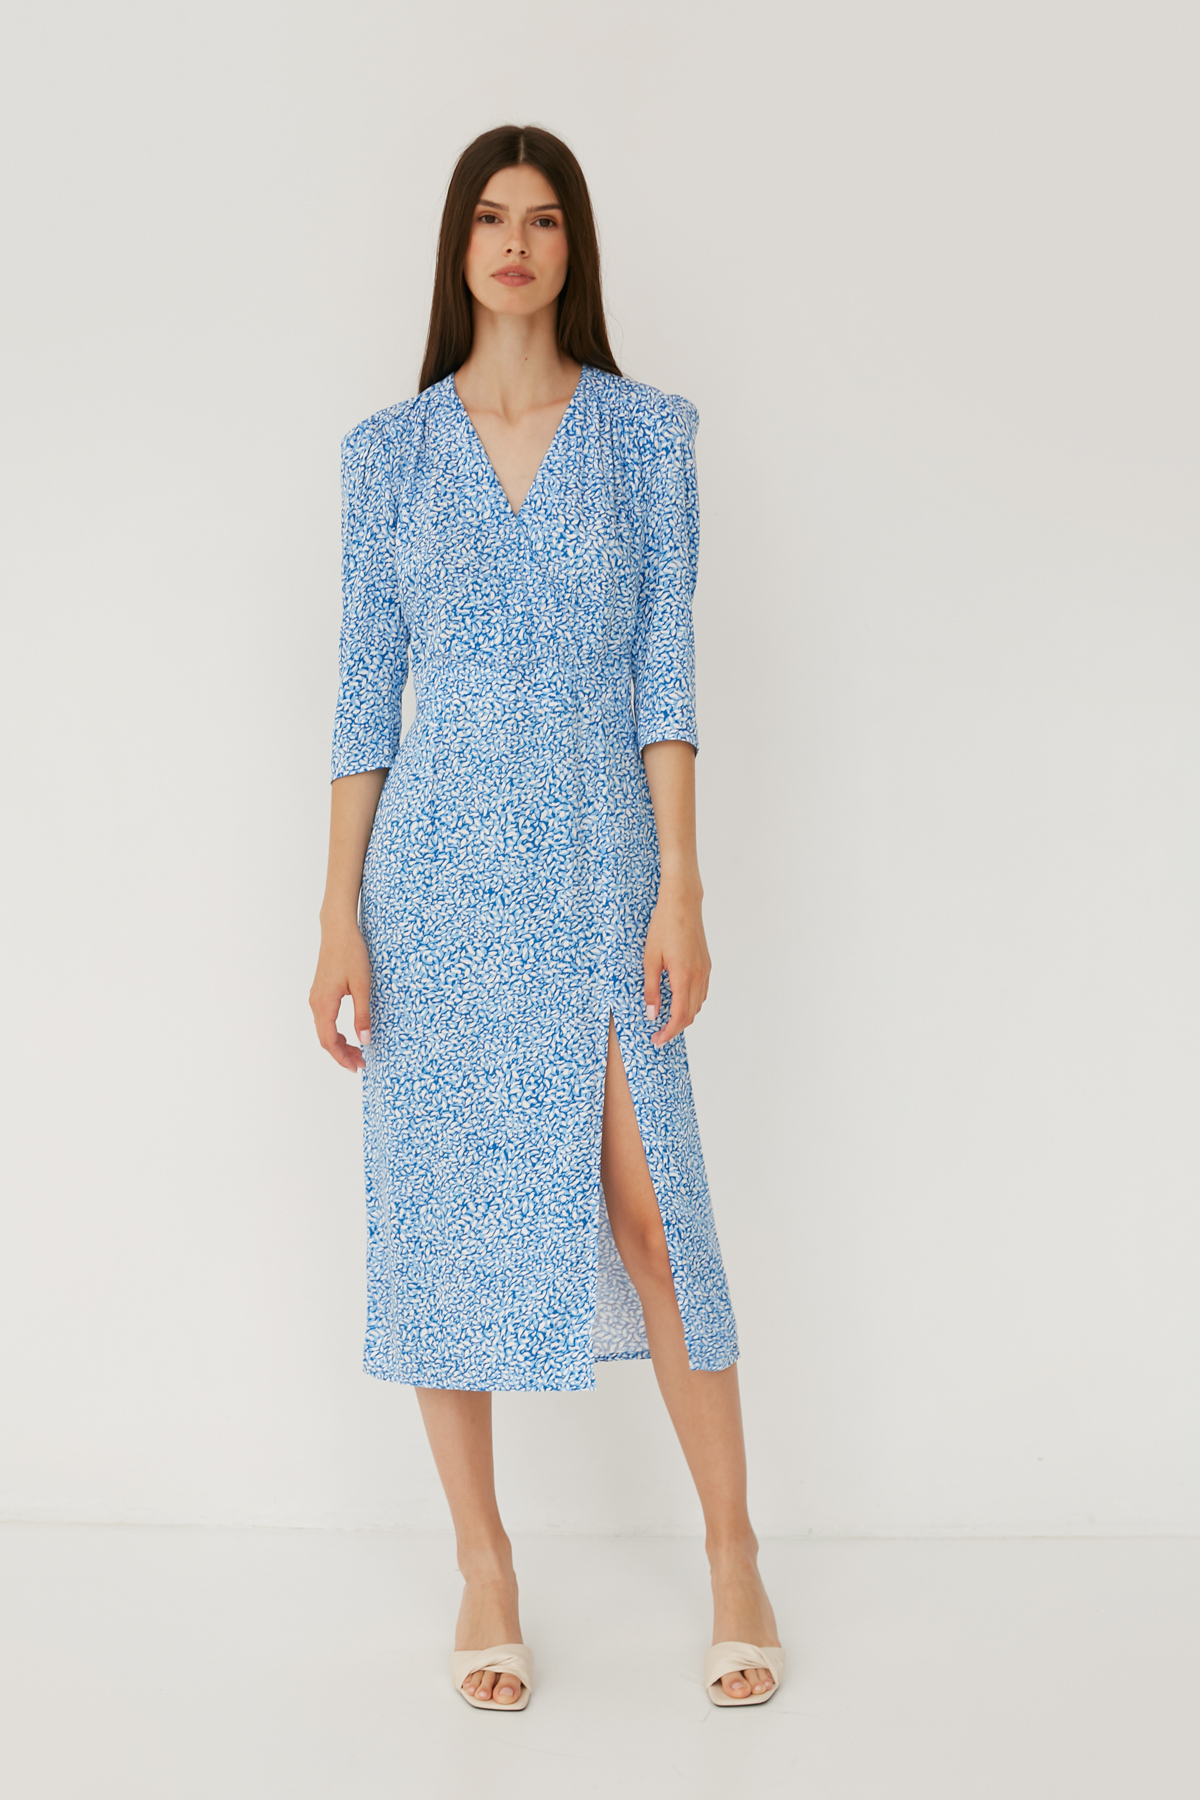 Viscose midi dress with slit in blue drops print, photo 2